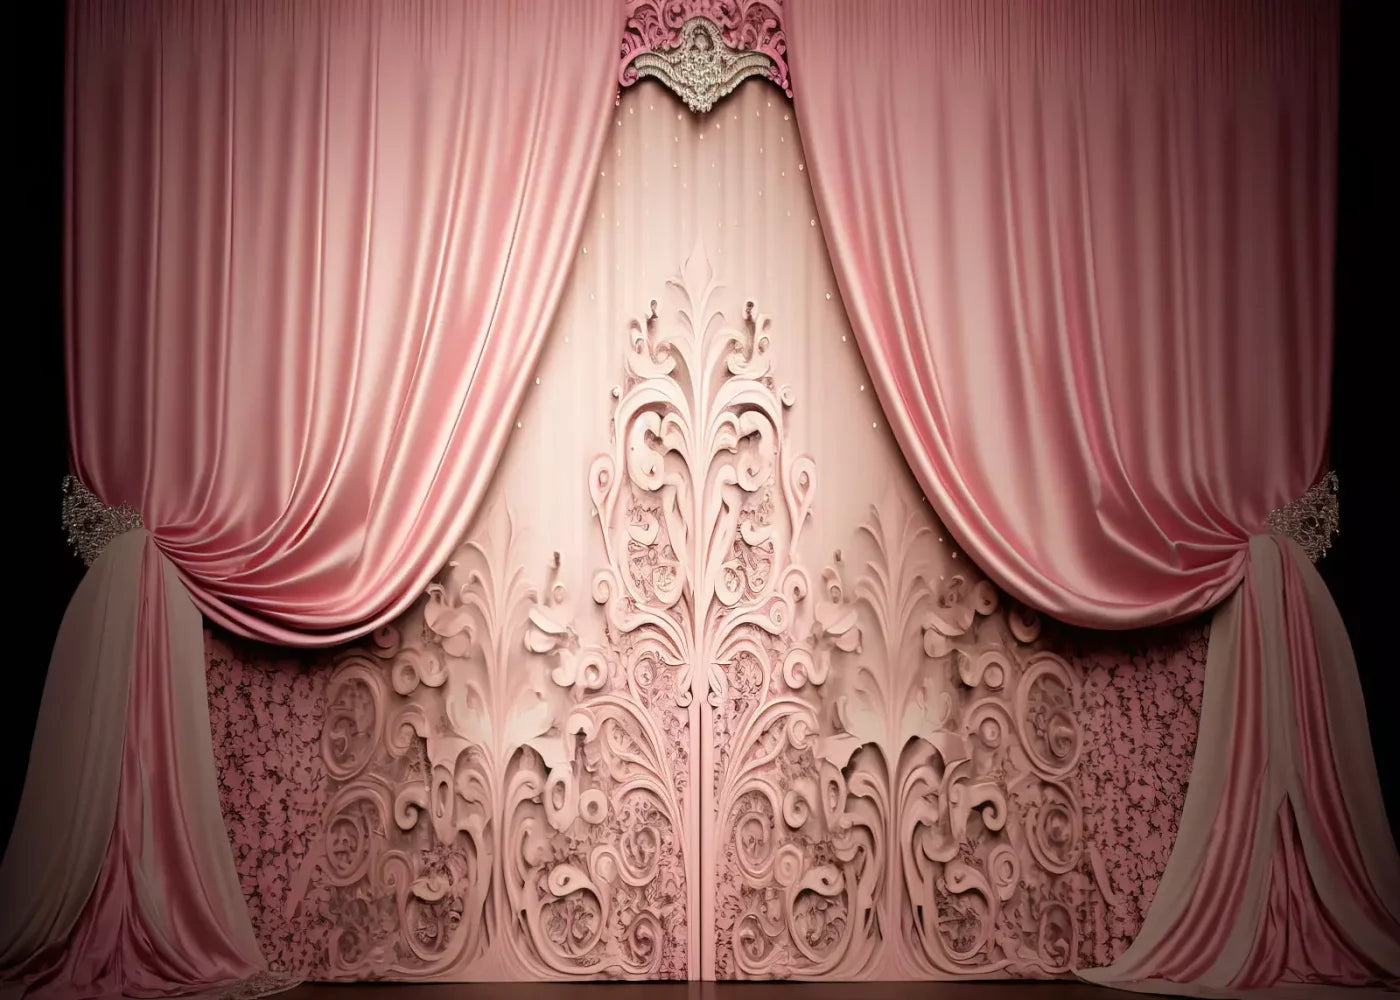 Doll House Curtains Ii 7’X5’ Ultracloth (84 X 60 Inch) Backdrop